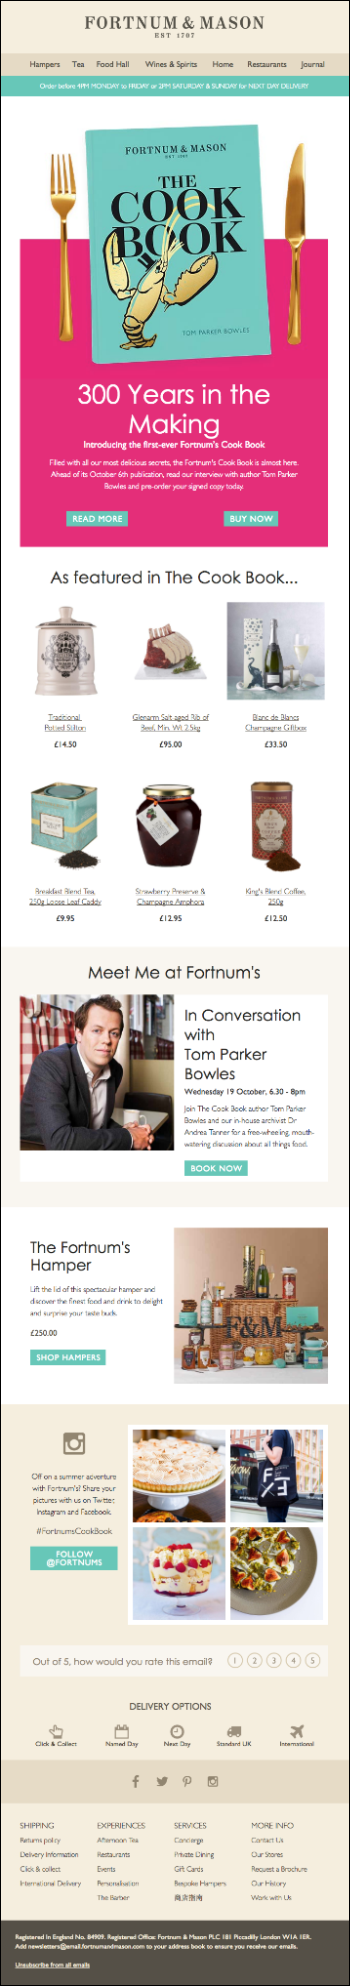 Fortum & Mason retail email